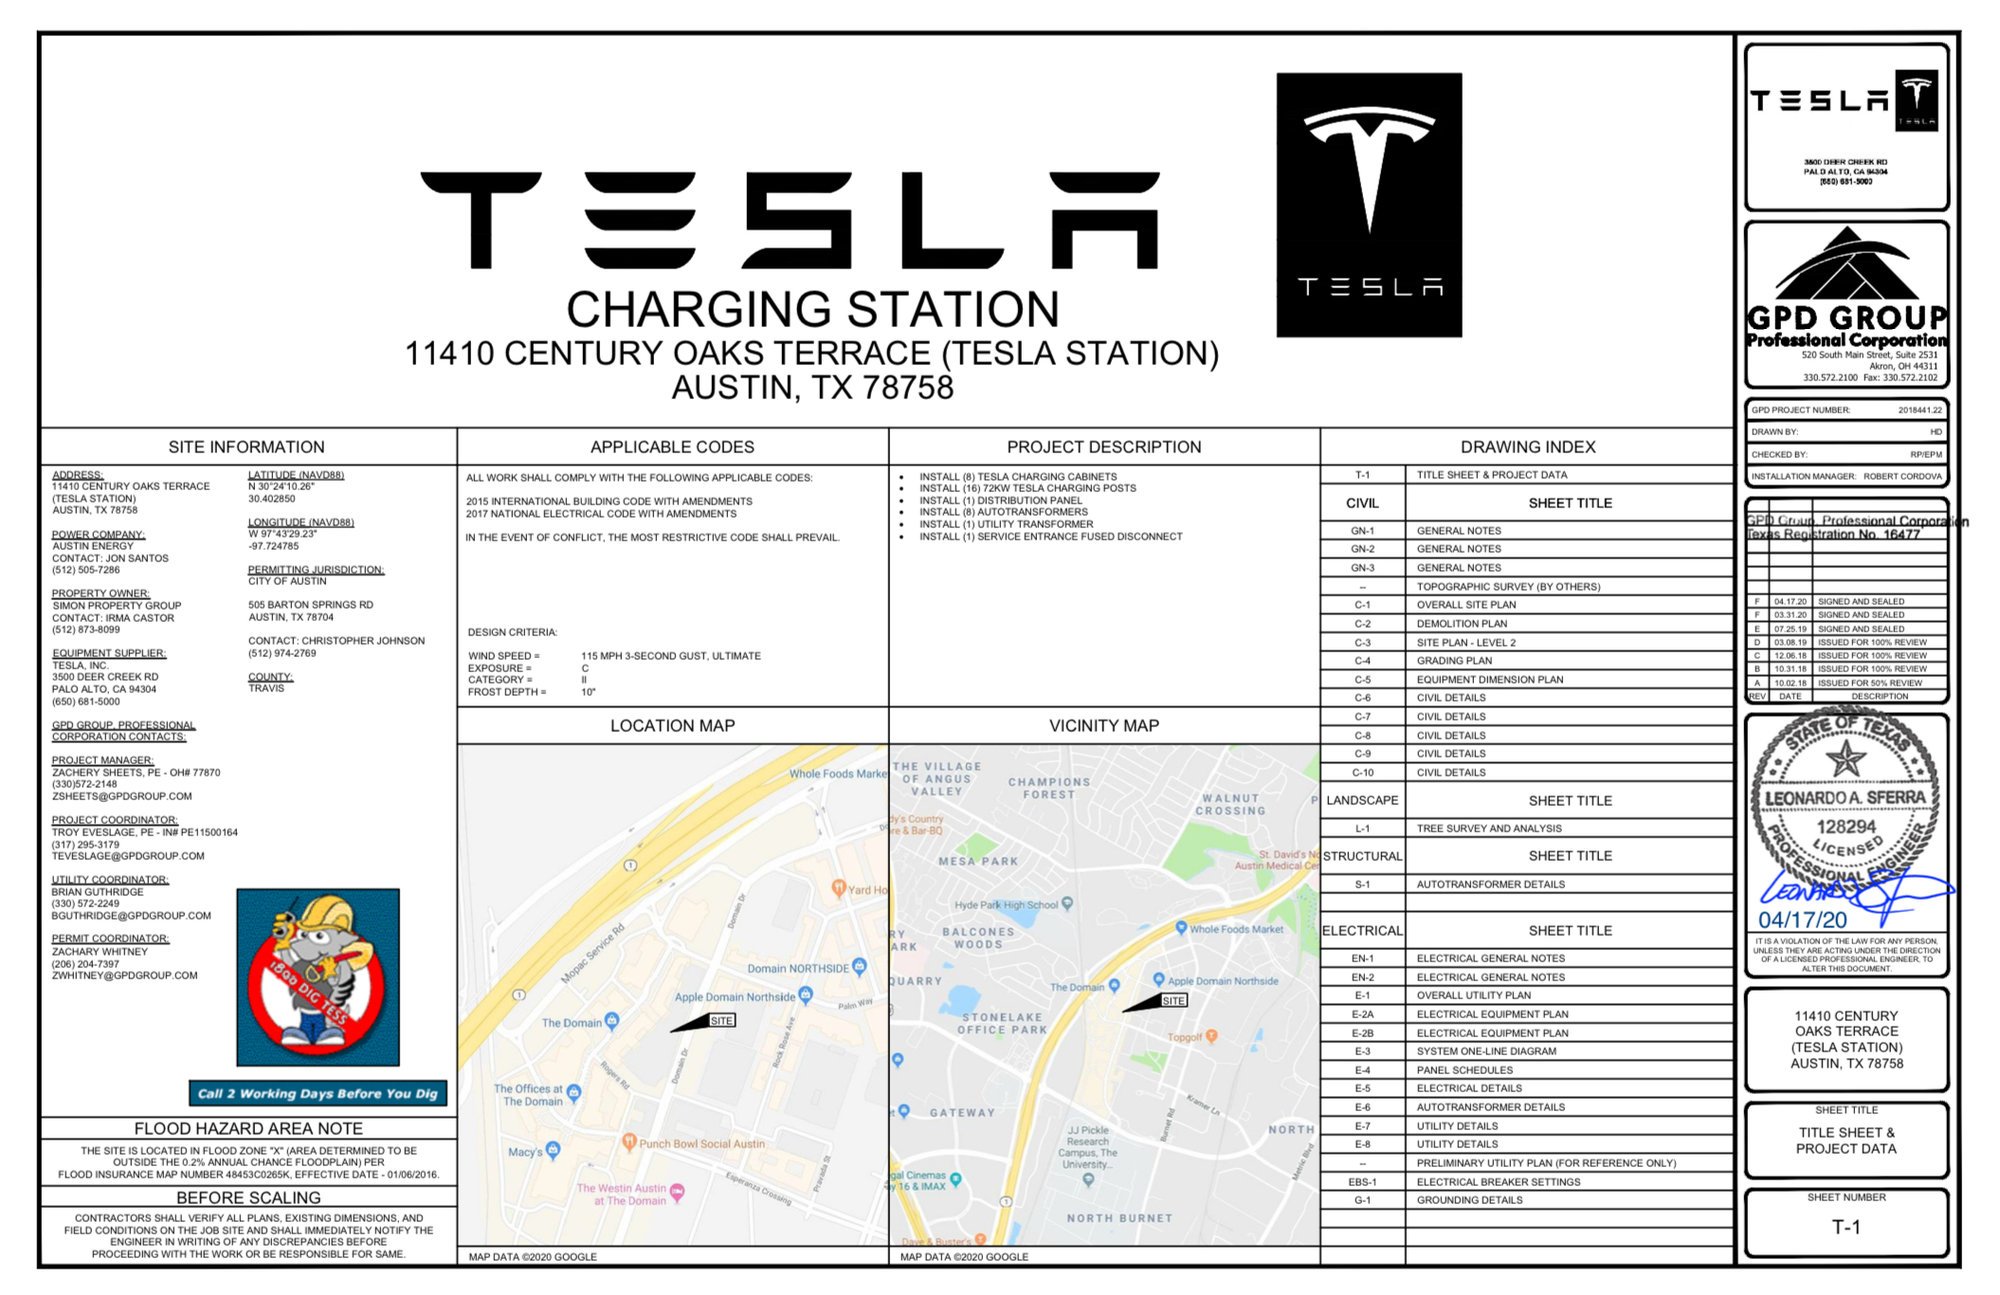 Supercharger - Austin, TX - Century Oaks Terrace